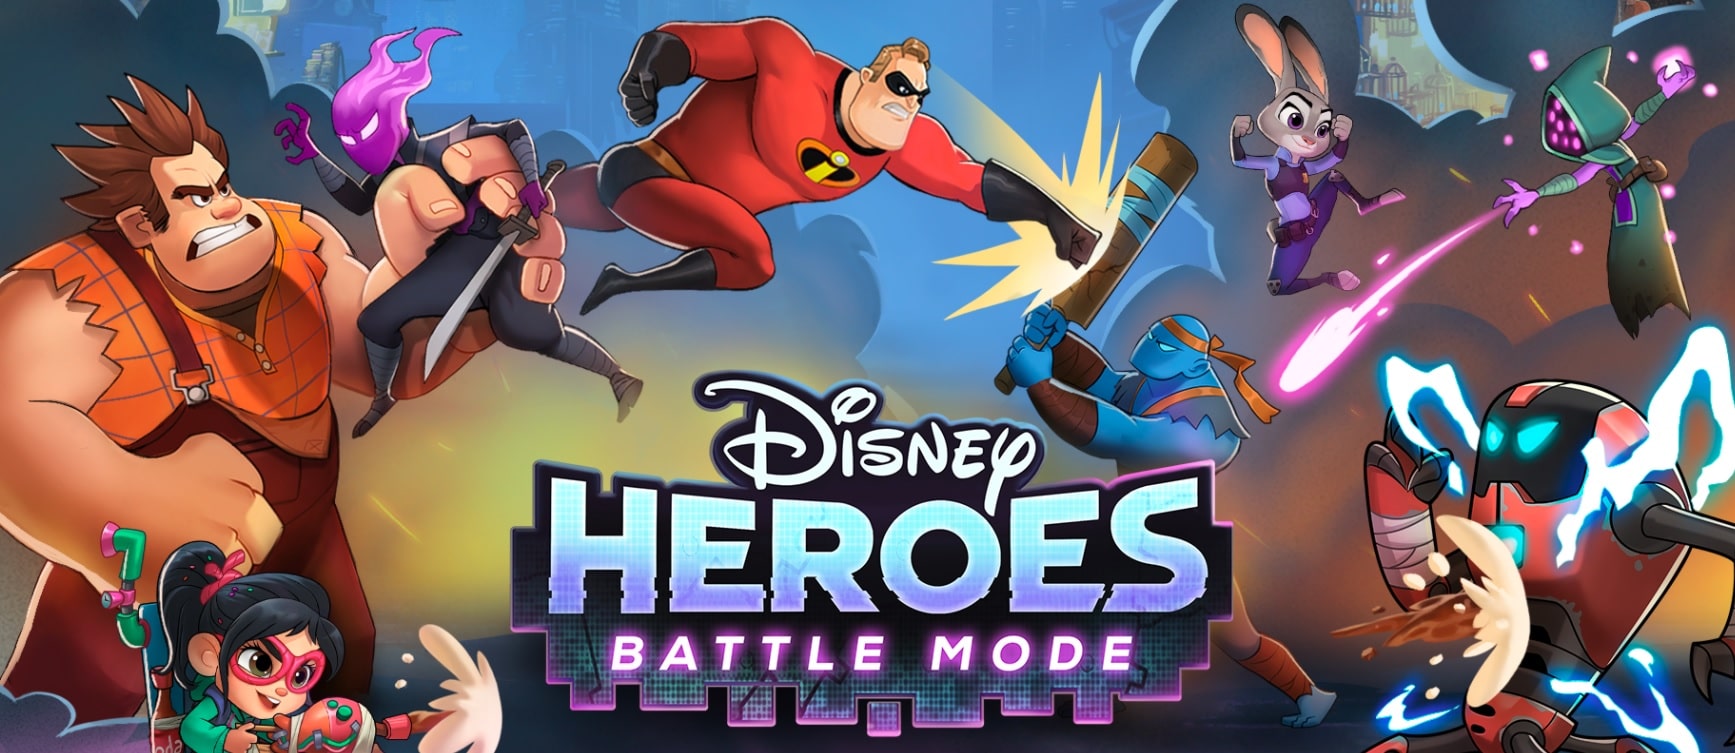 Disney Heroes: Battle Mode เกมมือถือรวมตัวละครจากดิสนีย์ Pixar เปิดลงทะเบียนล่วงหน้าแล้ว